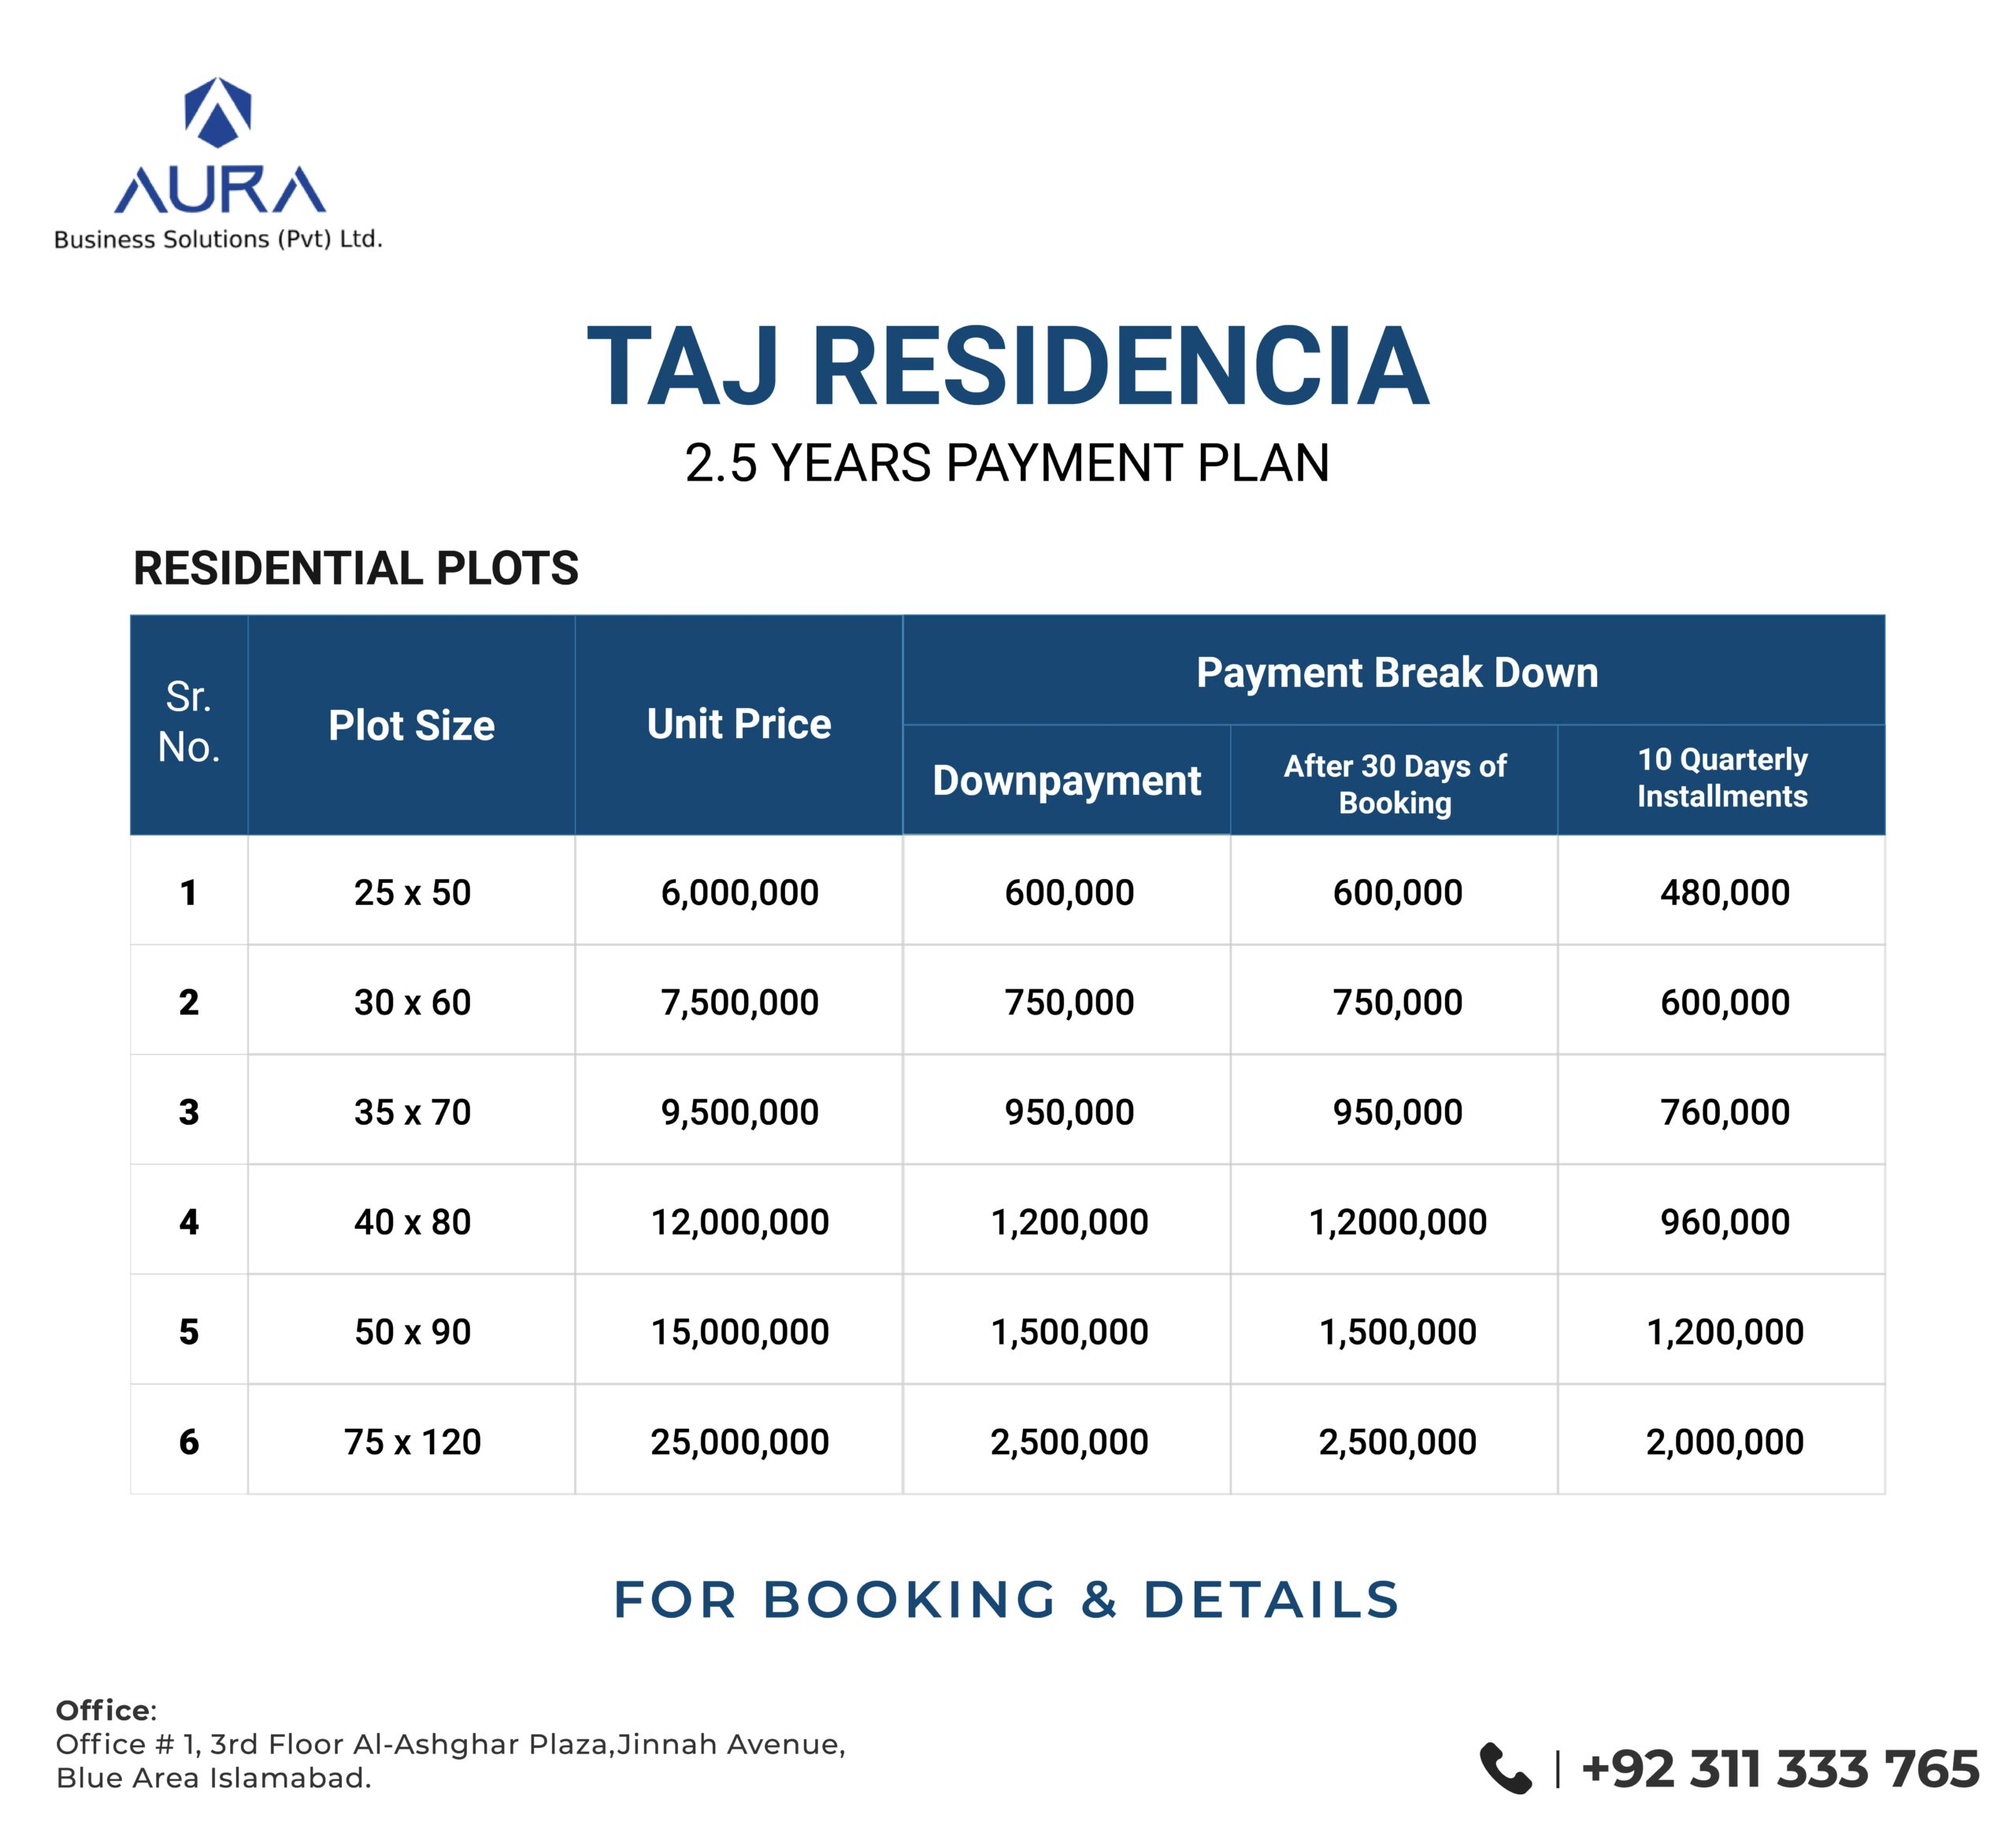 Taj Residencia Payment Plan 2.5 Years